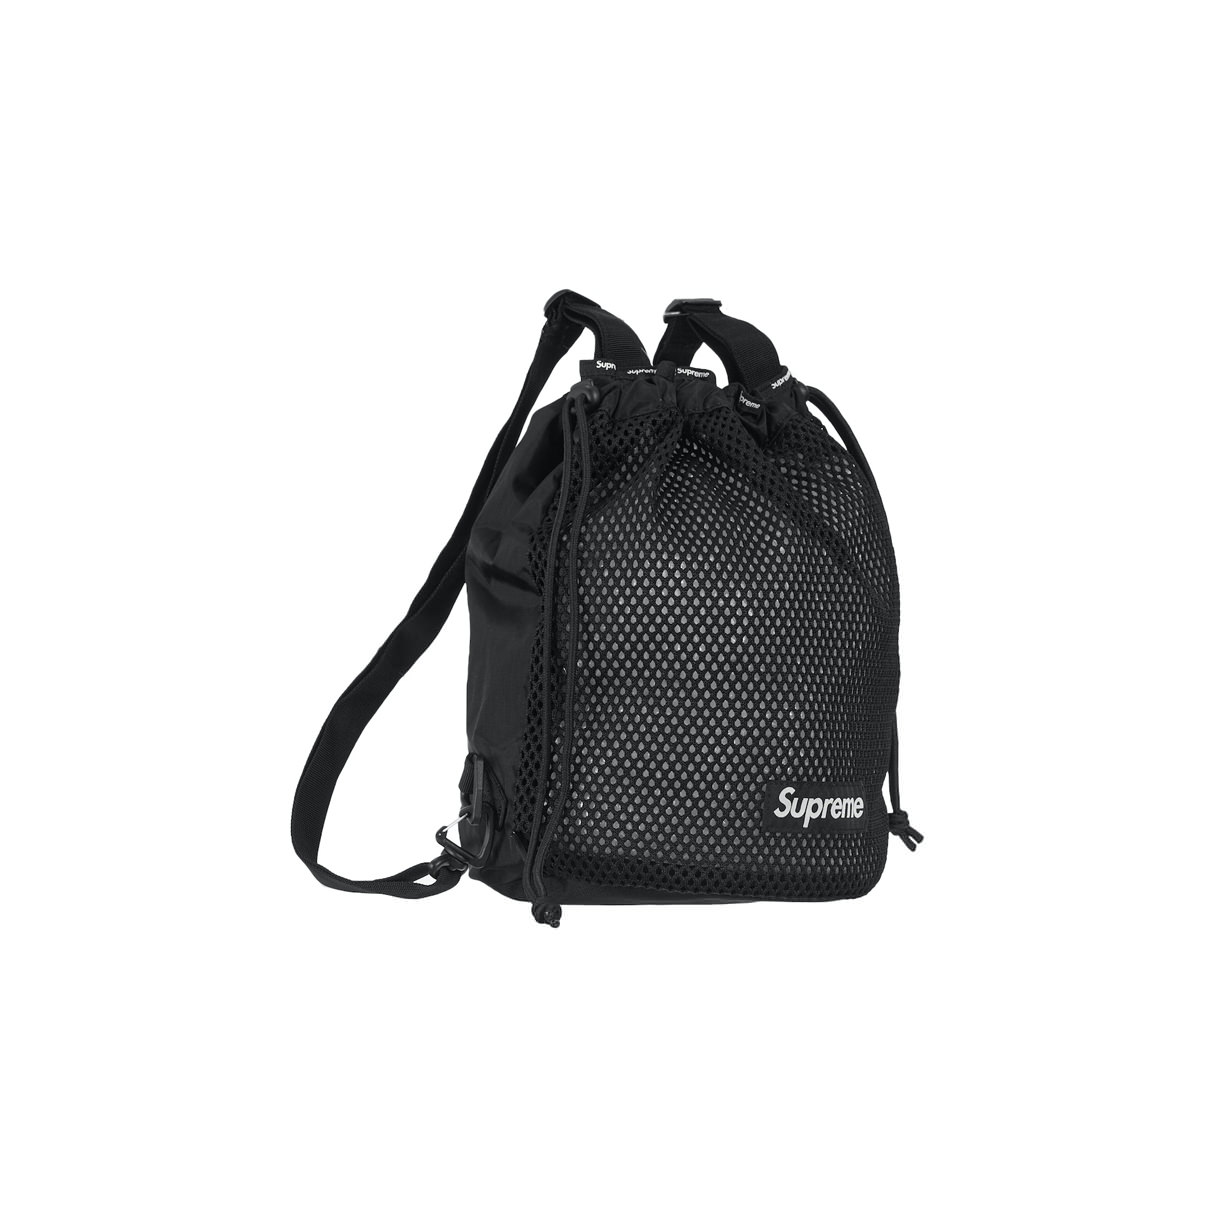 Supreme Cordura SS21 Backpack Black On Black Brand New